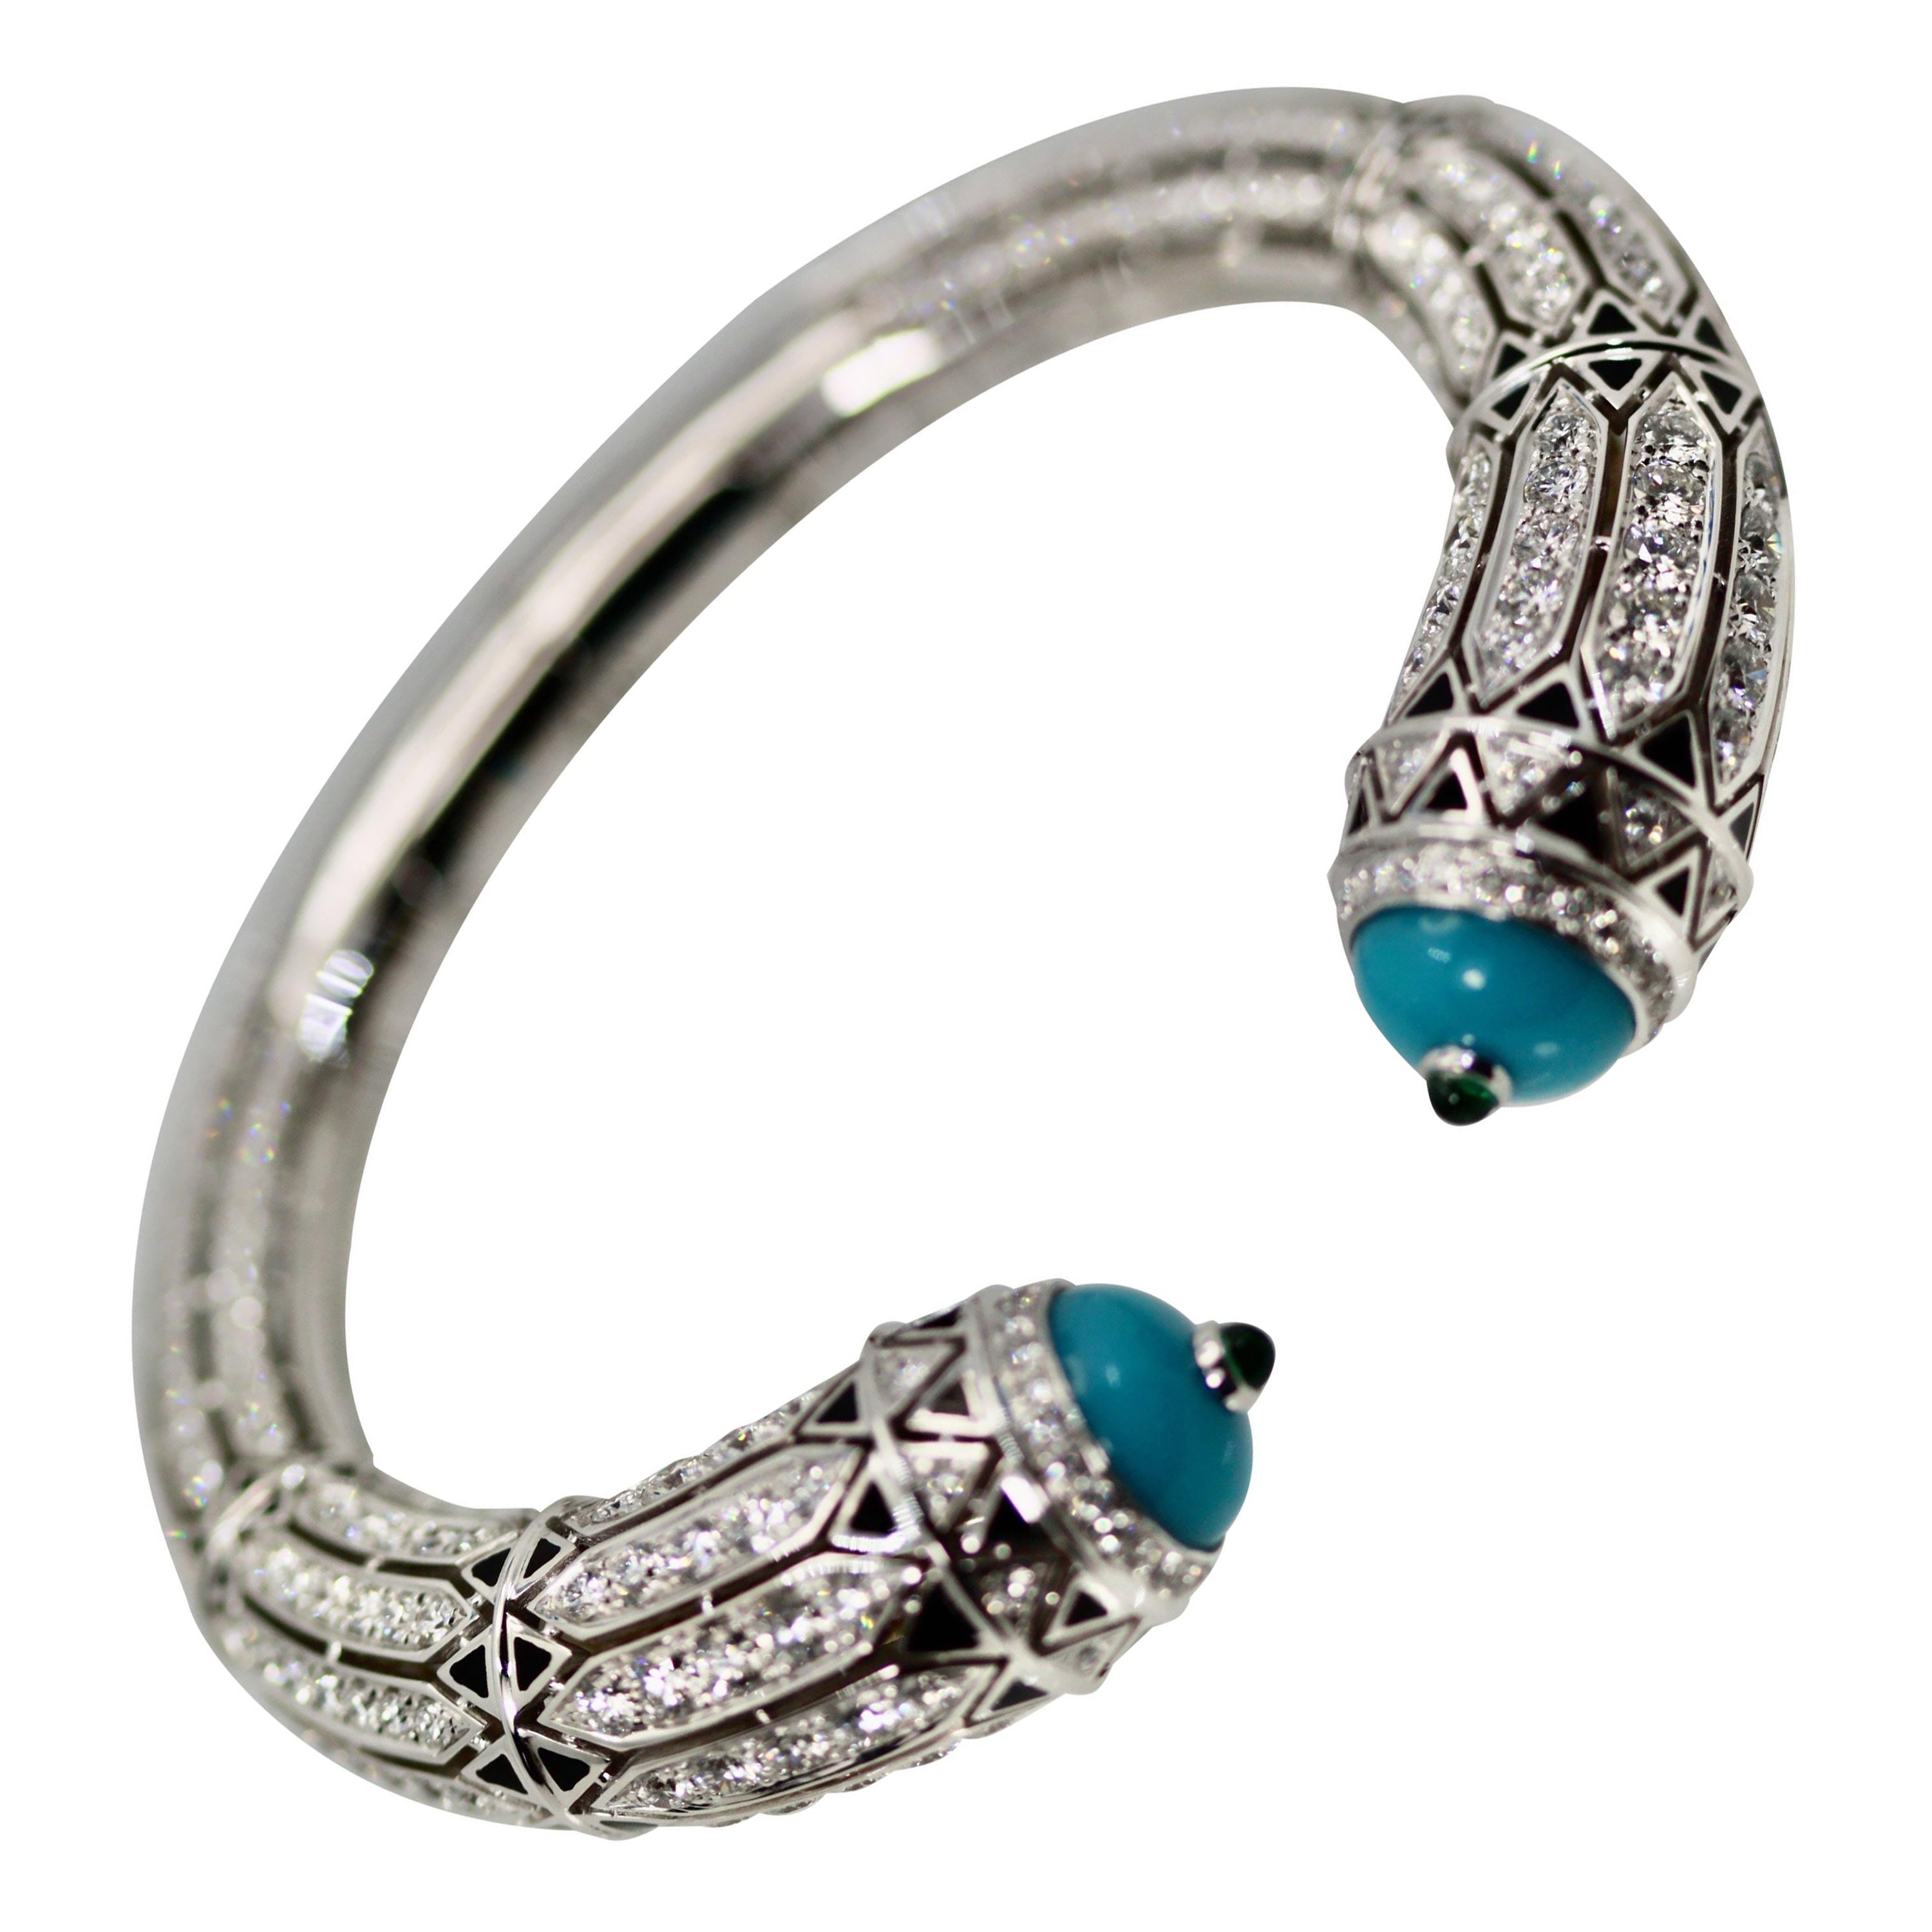 Cartier High Jewelry Türkis-Armband mit 12,73 Karat Diamanten, Deko-inspiriert